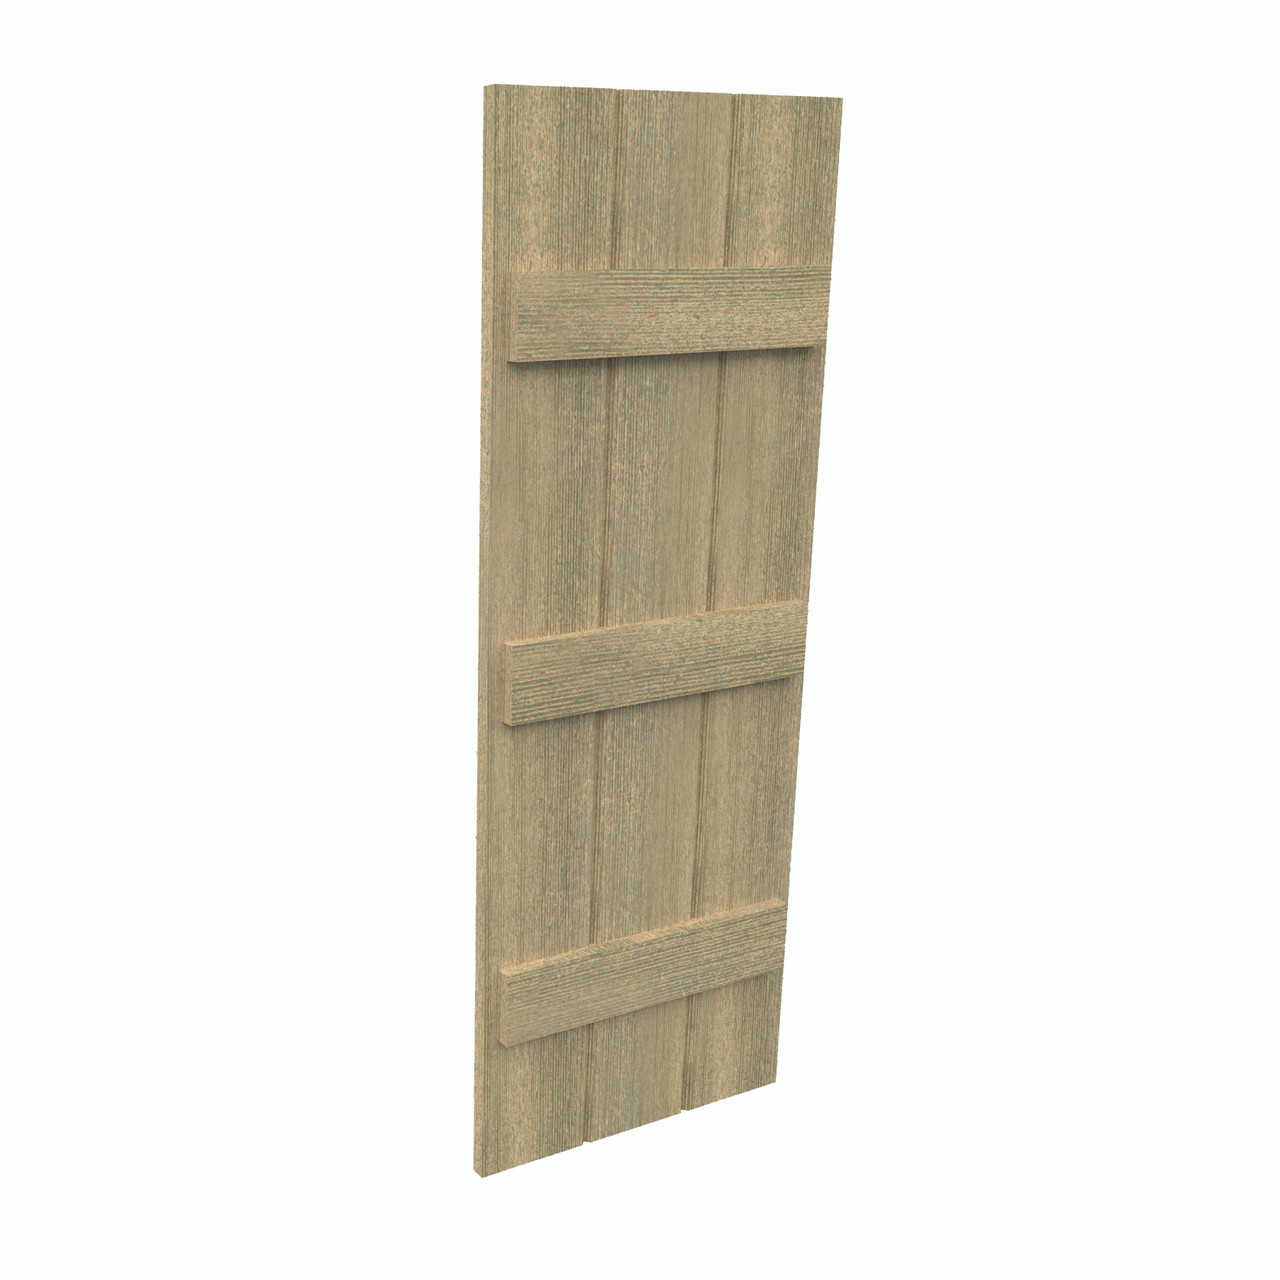 18 inch by 87 inch Plank Shutter with 3-Plank, 3-Batten